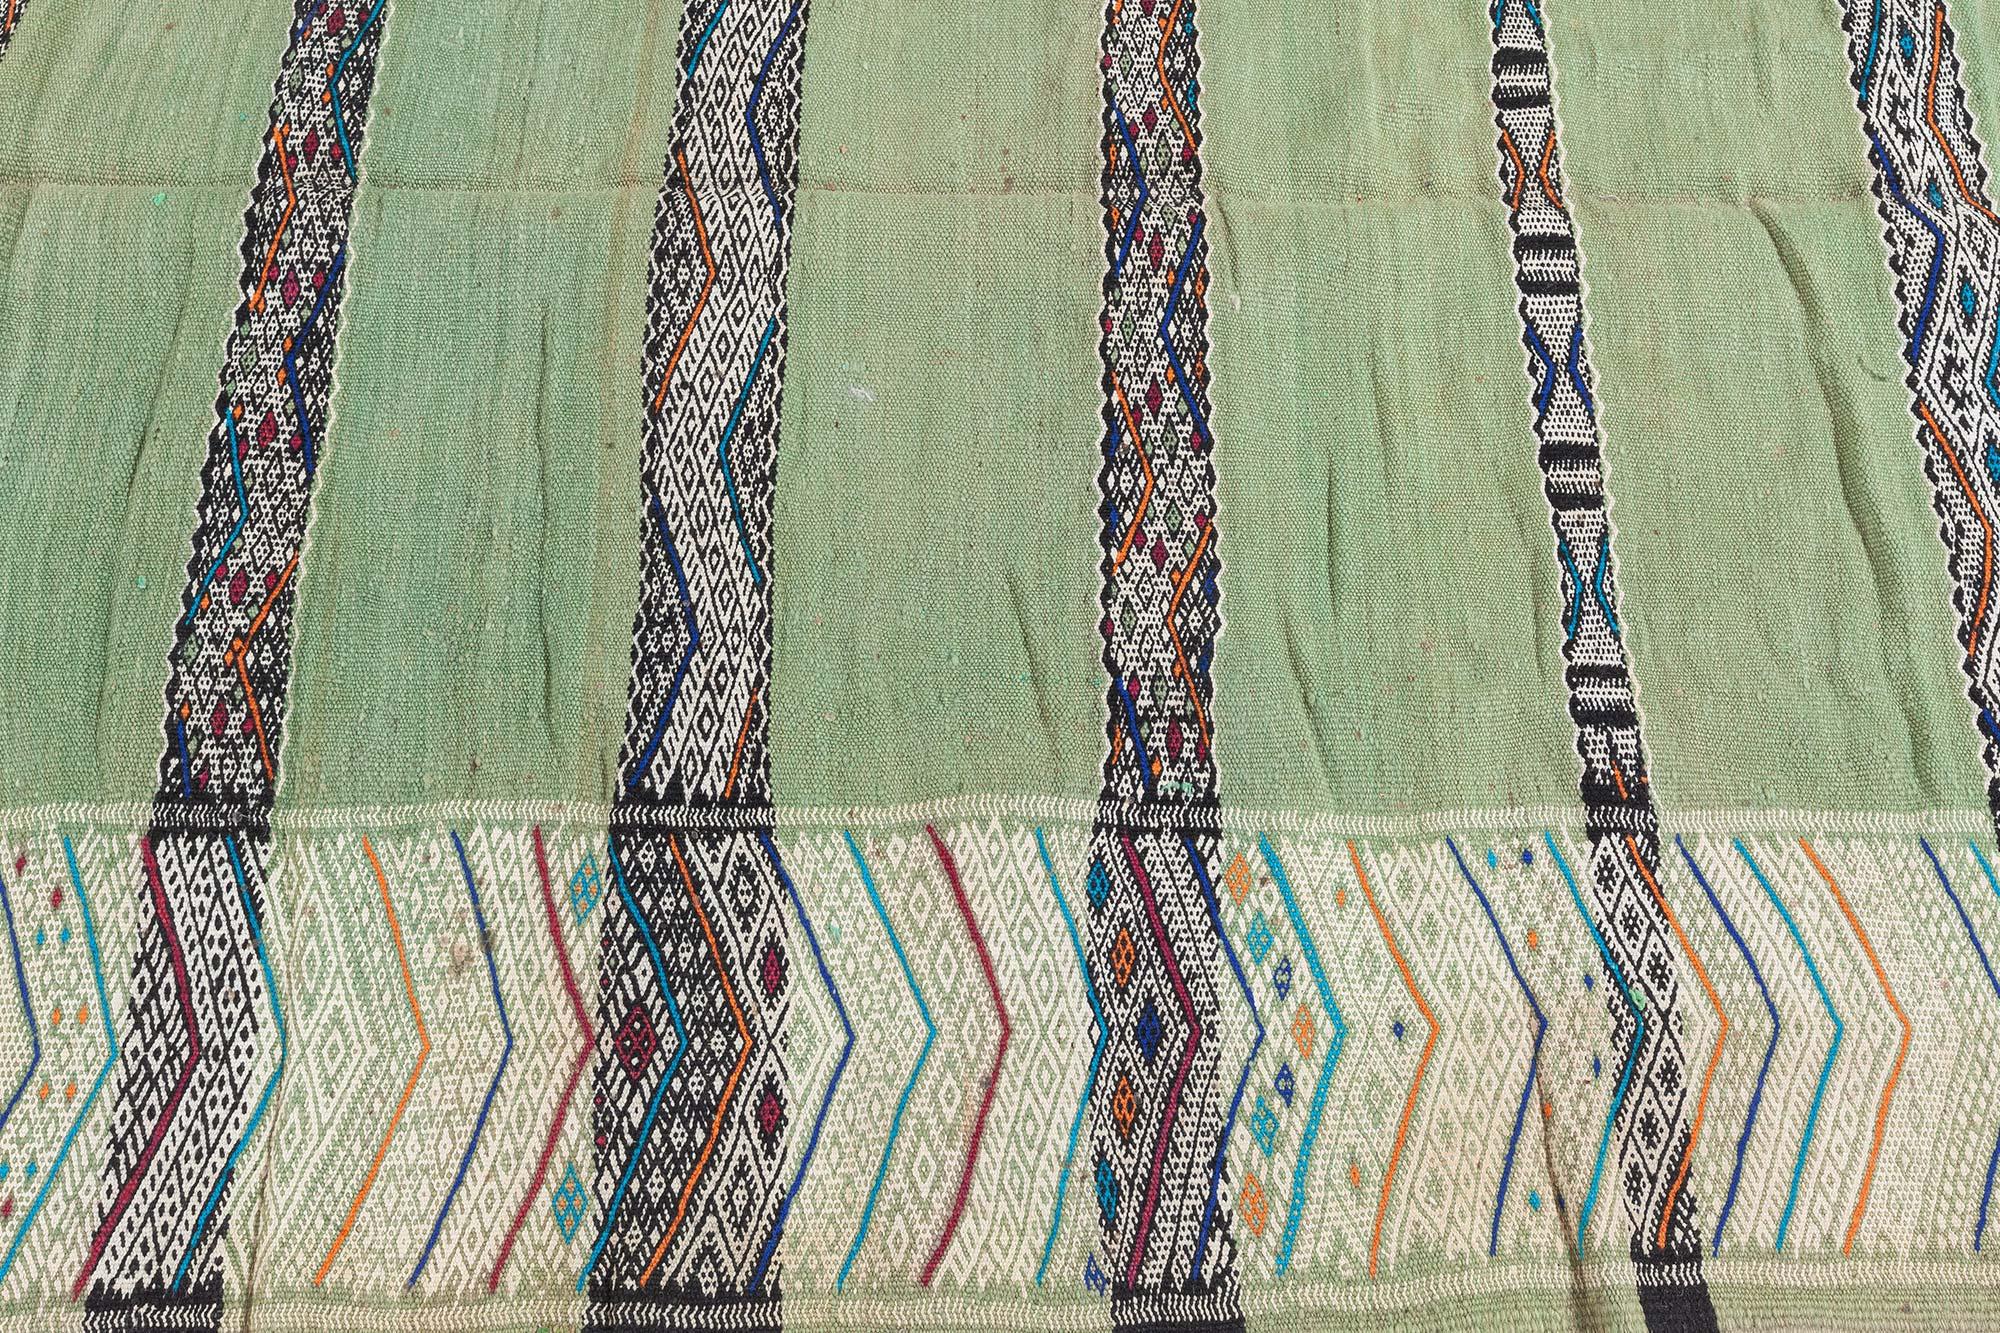 Vintage Moroccan Green Tribal Rug
Size: 5'0